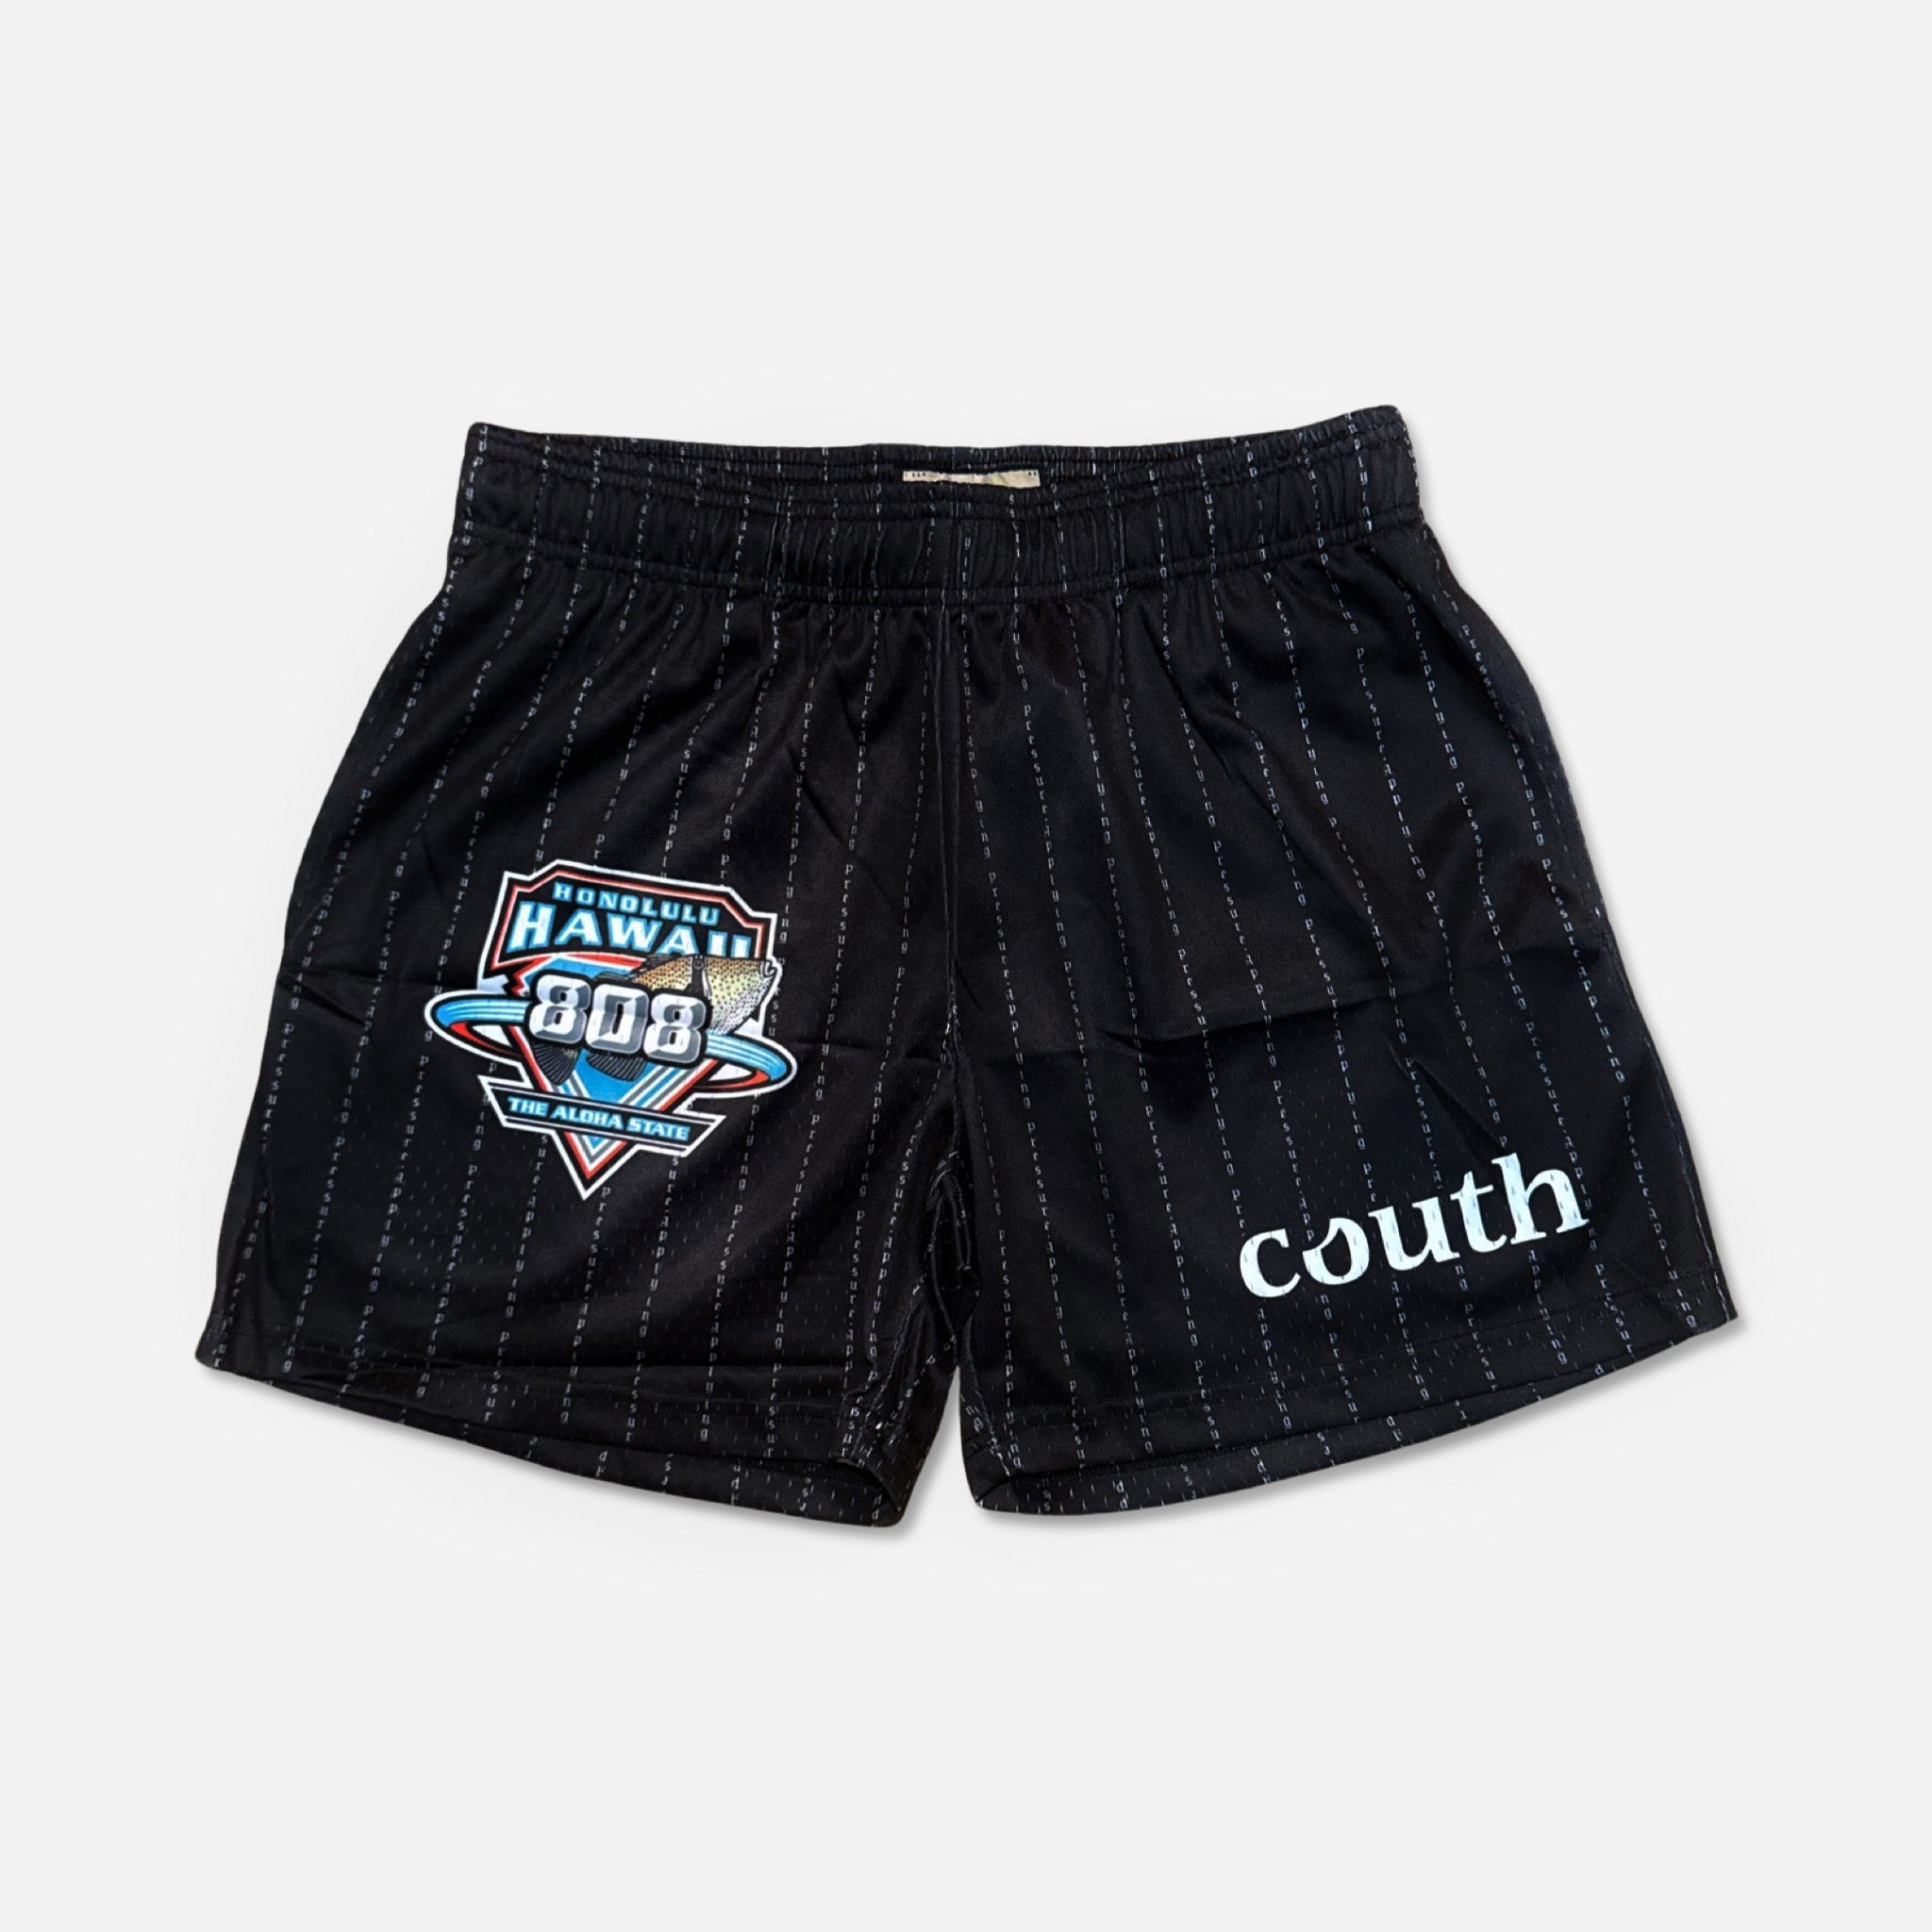 The Aloha State Shorts